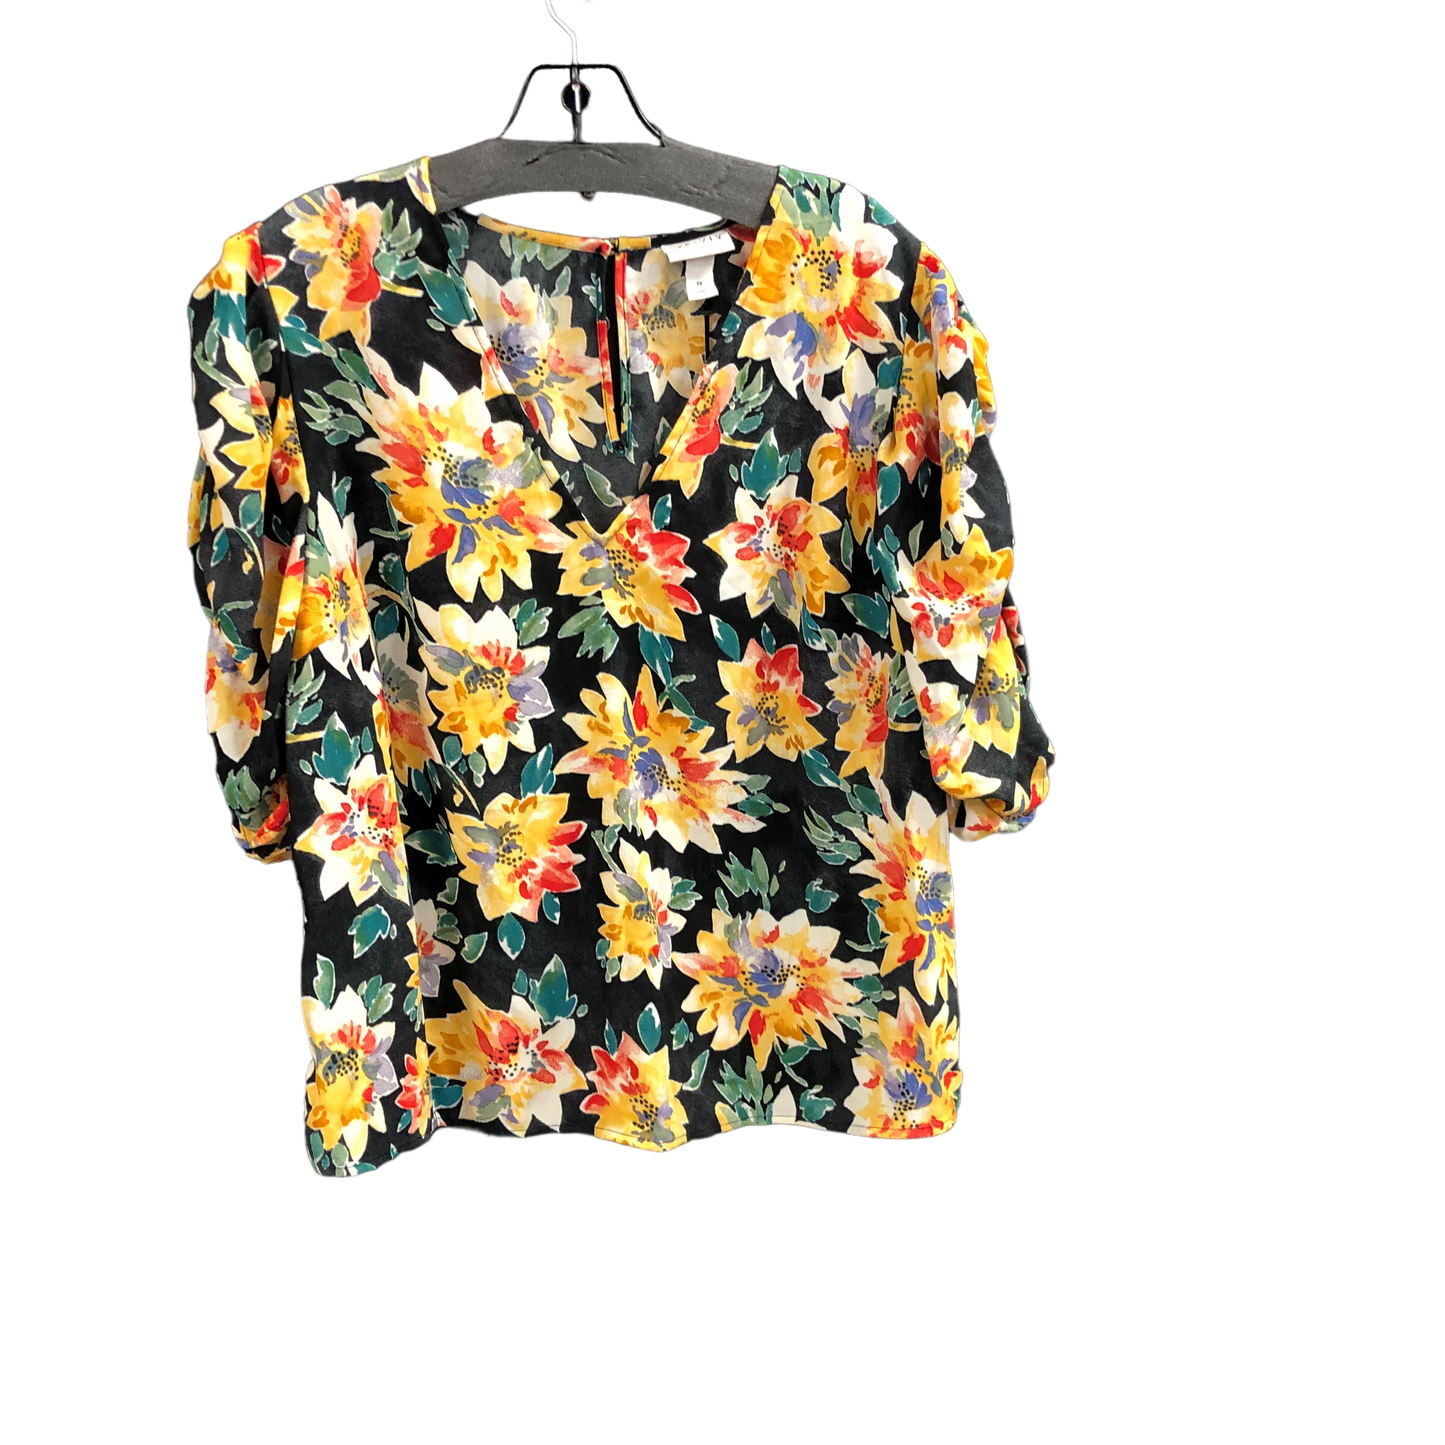 Floral Print Top Short Sleeve Ava & Viv, Size 1x